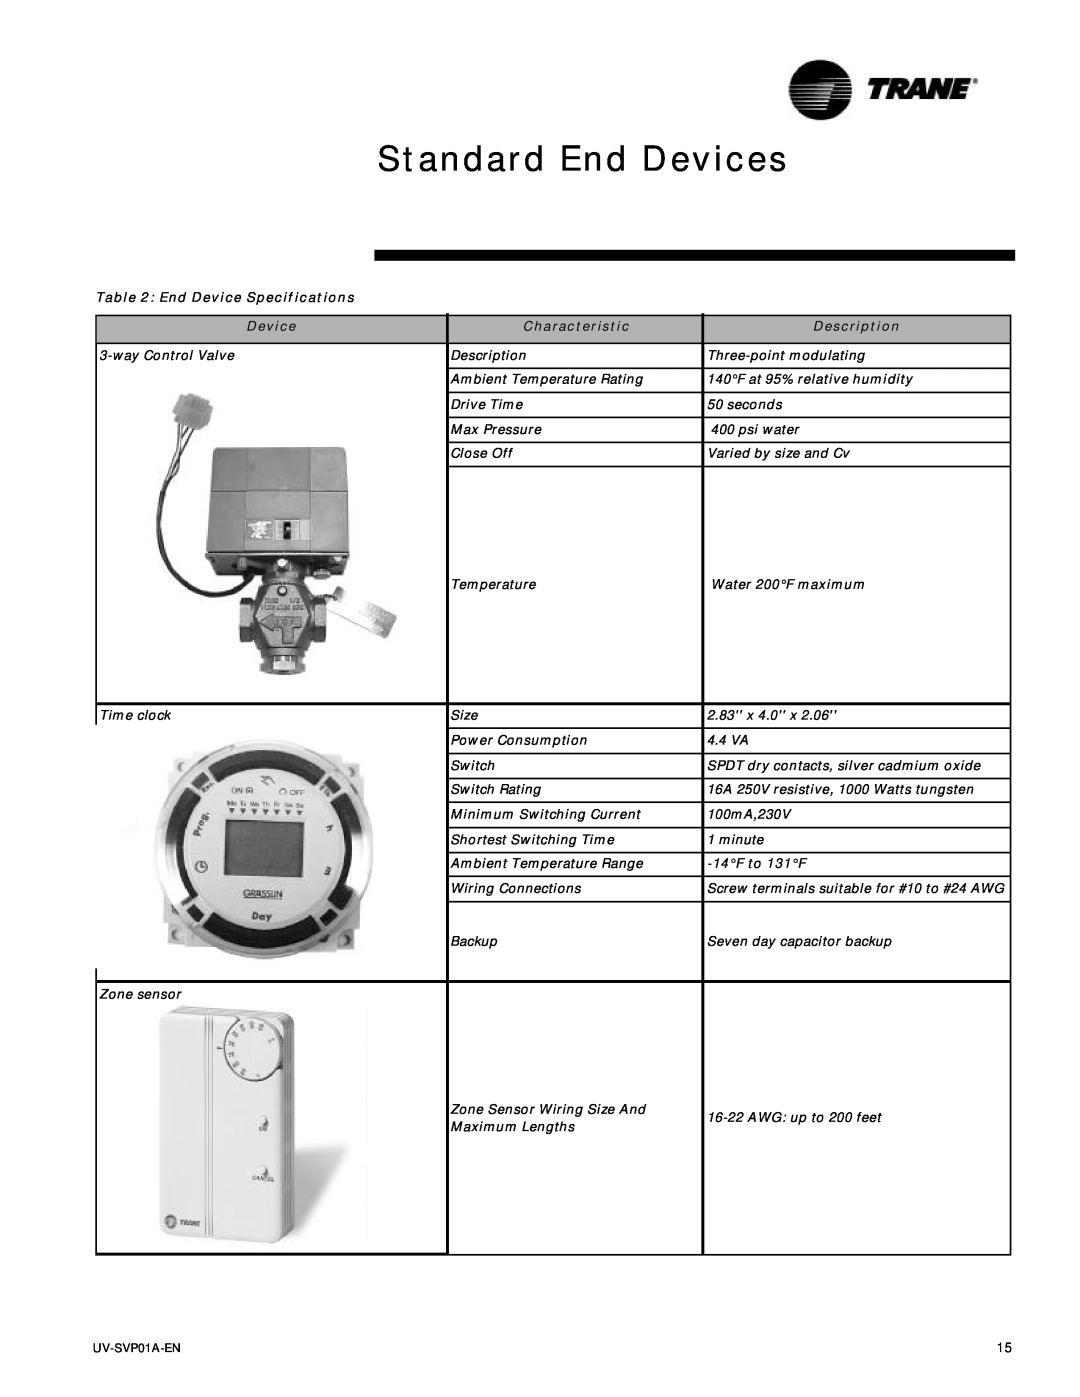 Trane ZN.520 Standard End Devices, End Device Specifications Device, way Control Valve Time clock Zone sensor, Description 